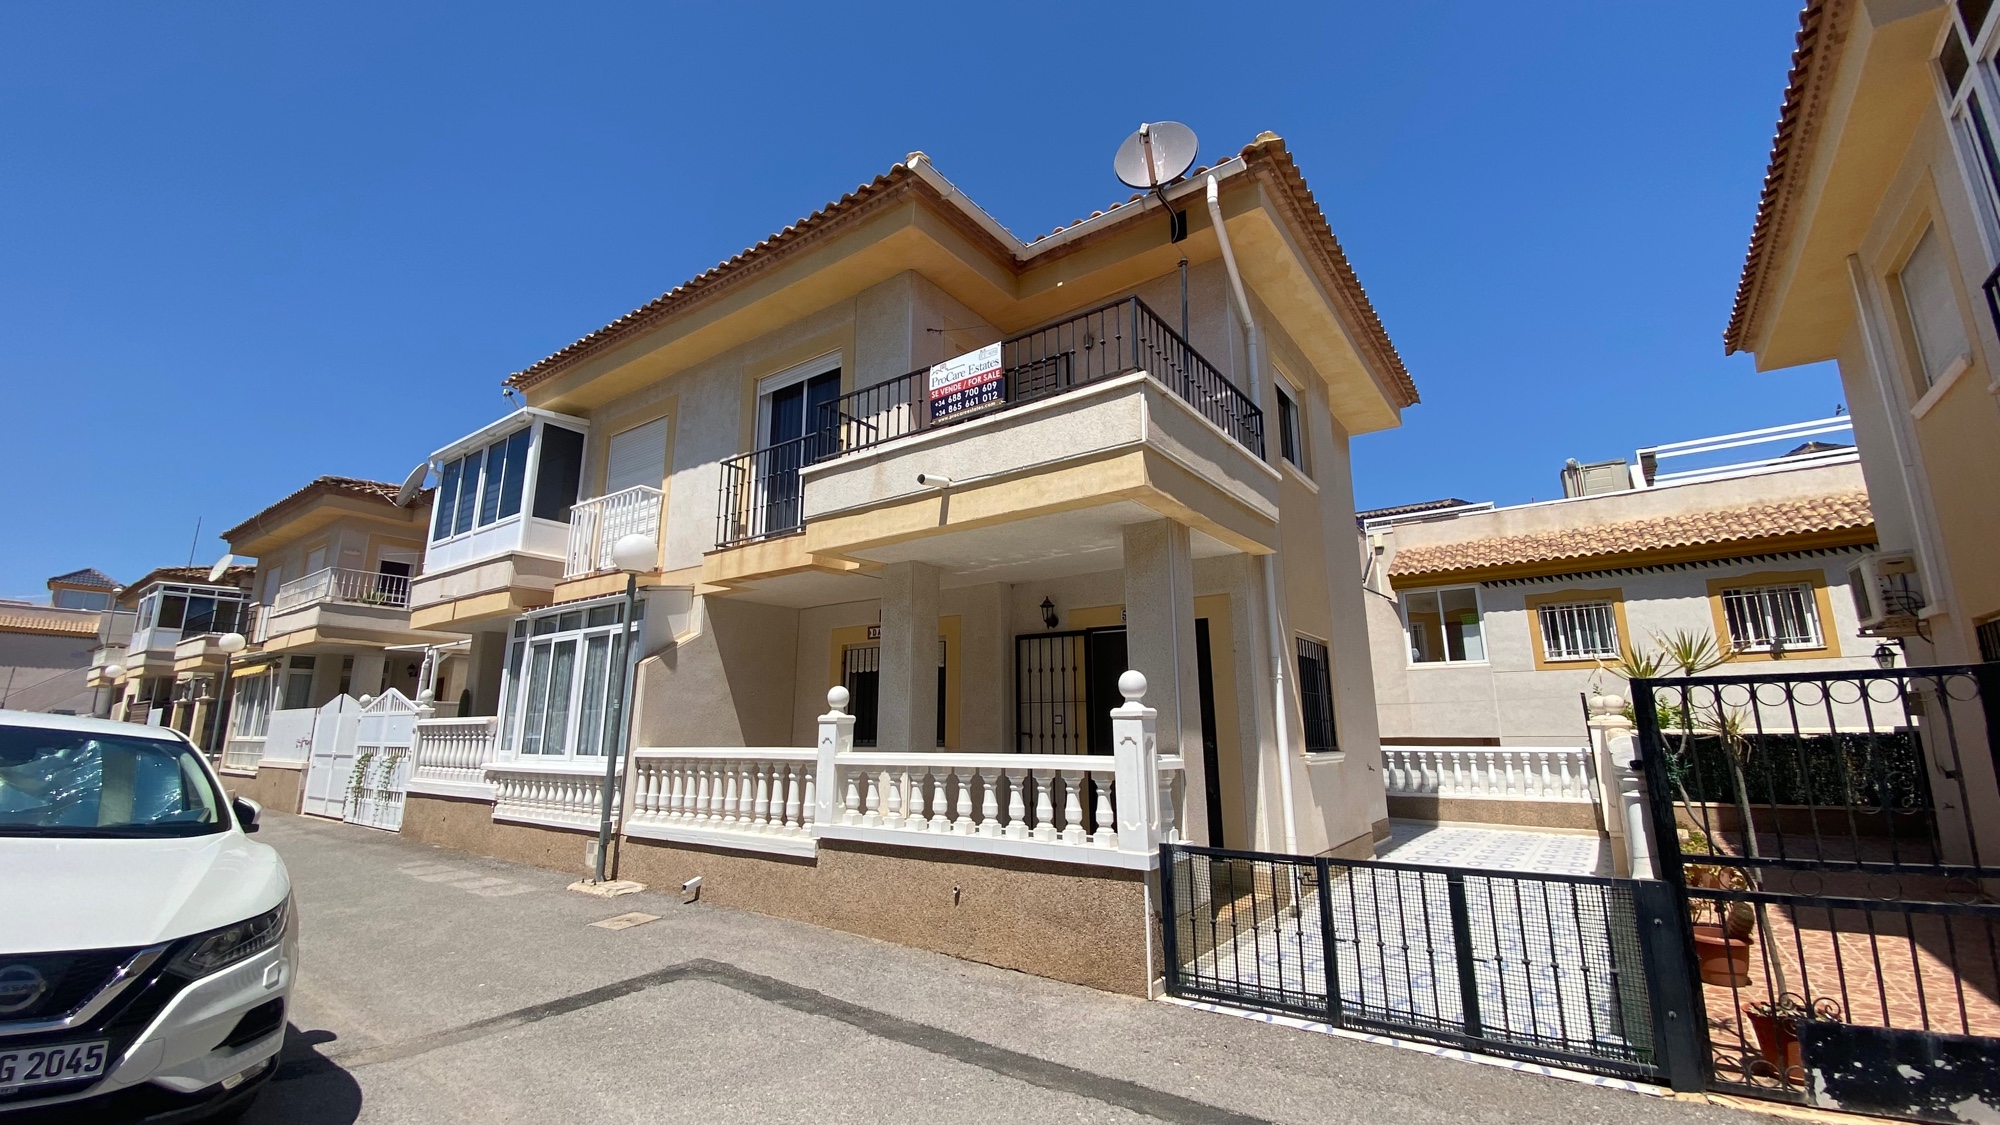 2 bedroom house / villa for sale in Guardamar del Segura, Costa Blanca